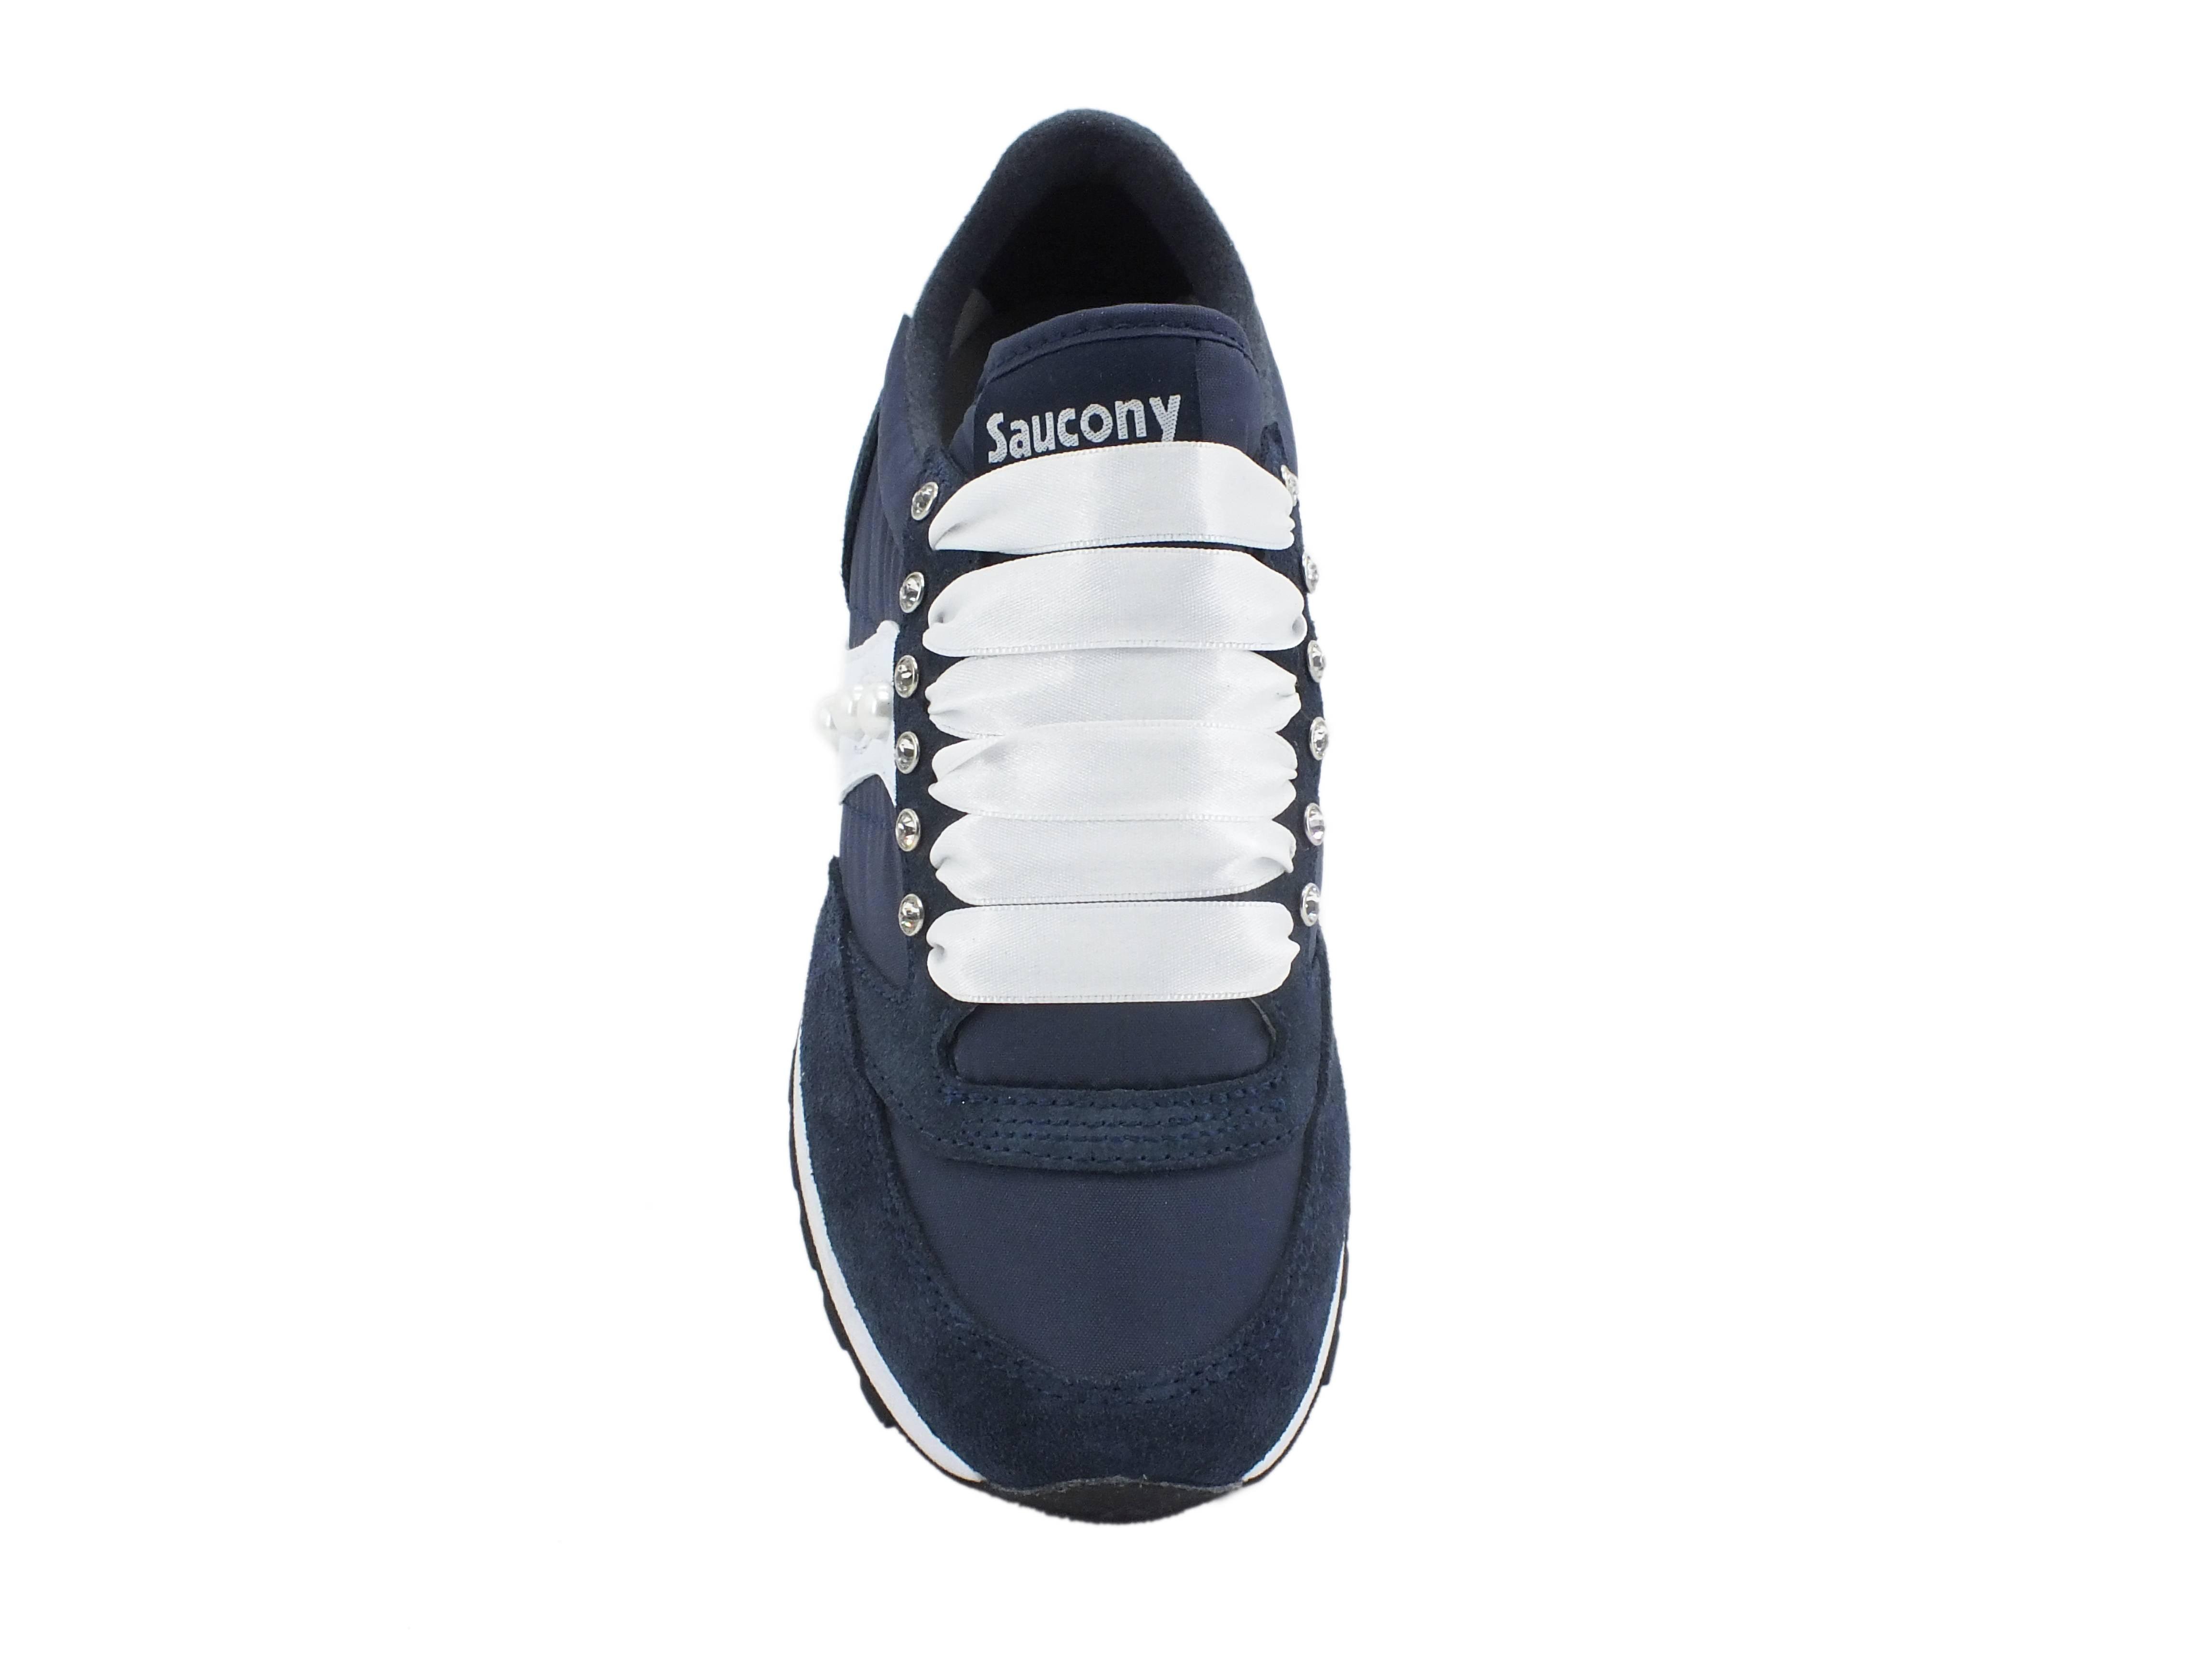 CUSTOM / SAUCONY Jazz Original Sneaker Borchie Studs Navy White S1044-316 - Sandrini Calzature e Abbigliamento